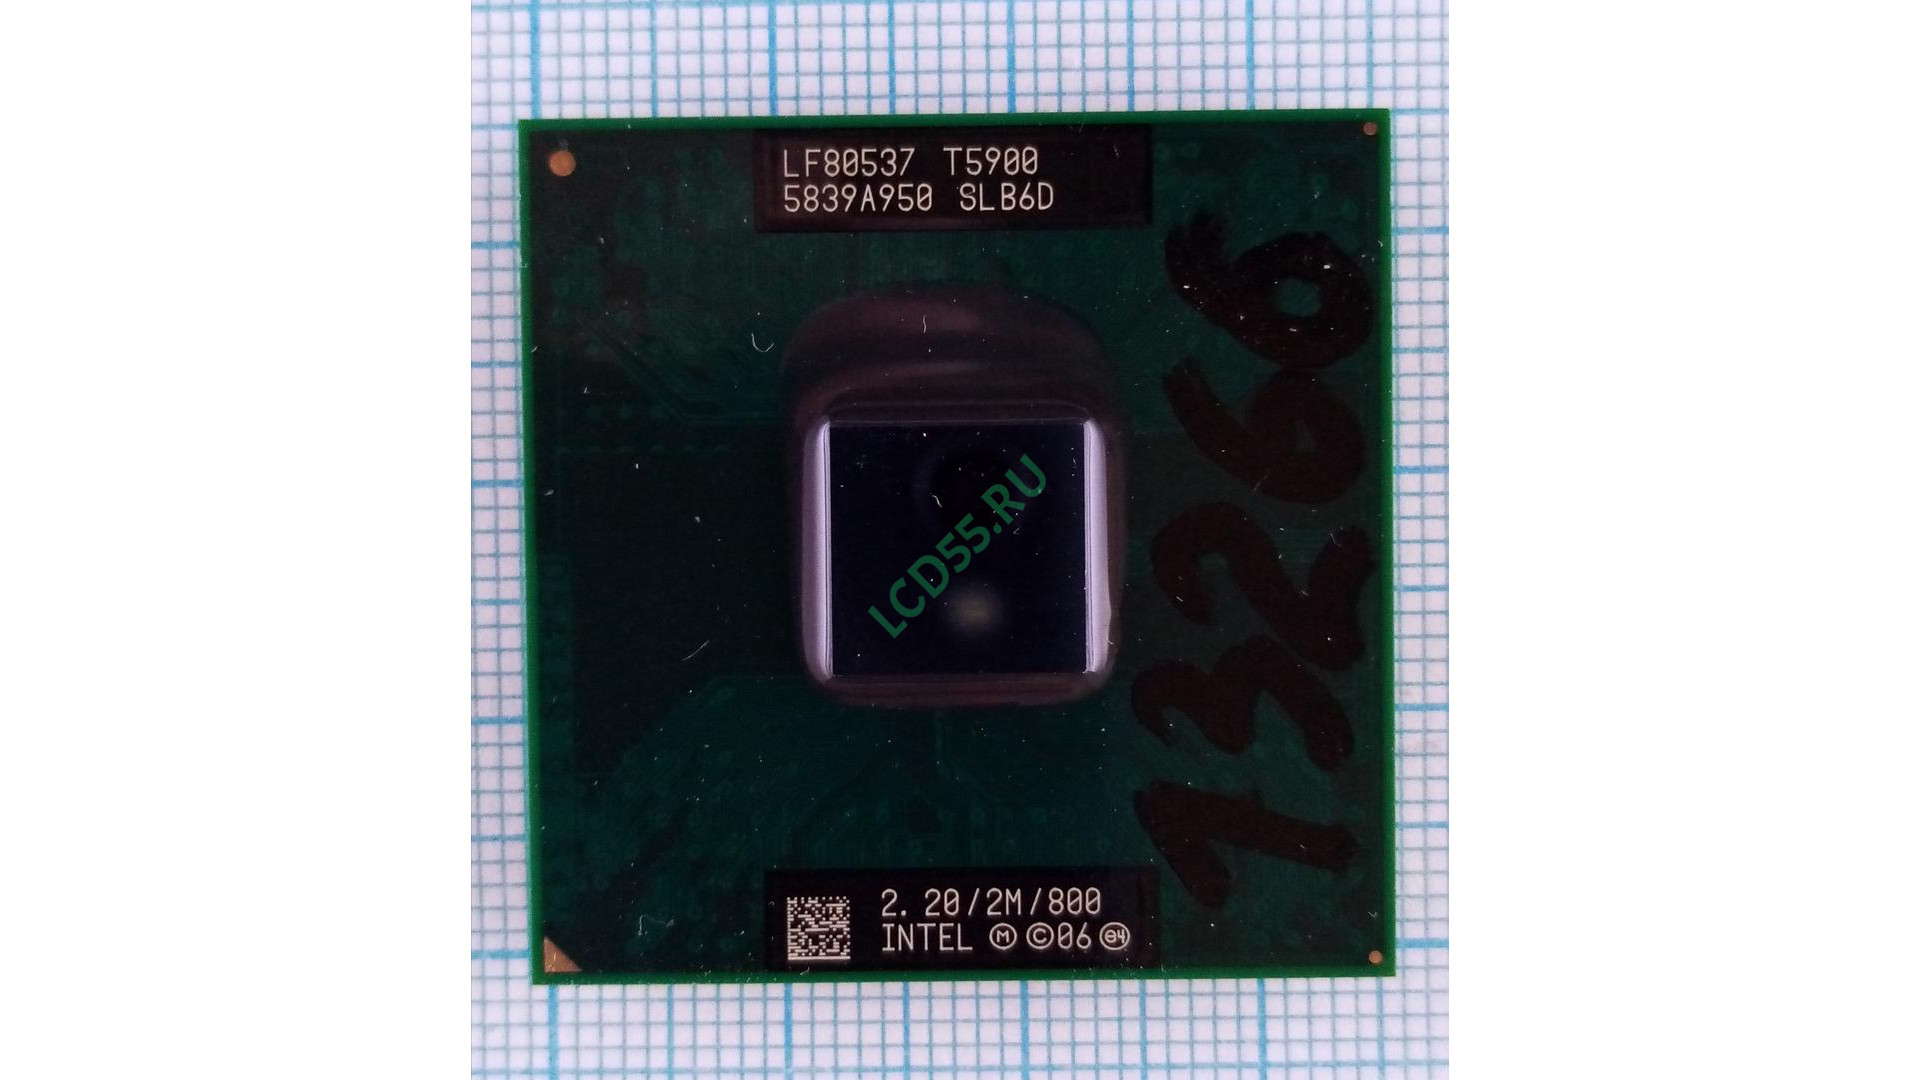 Intel Core 2 Duo Mobile T5900 SLB6D 2.2 GHz